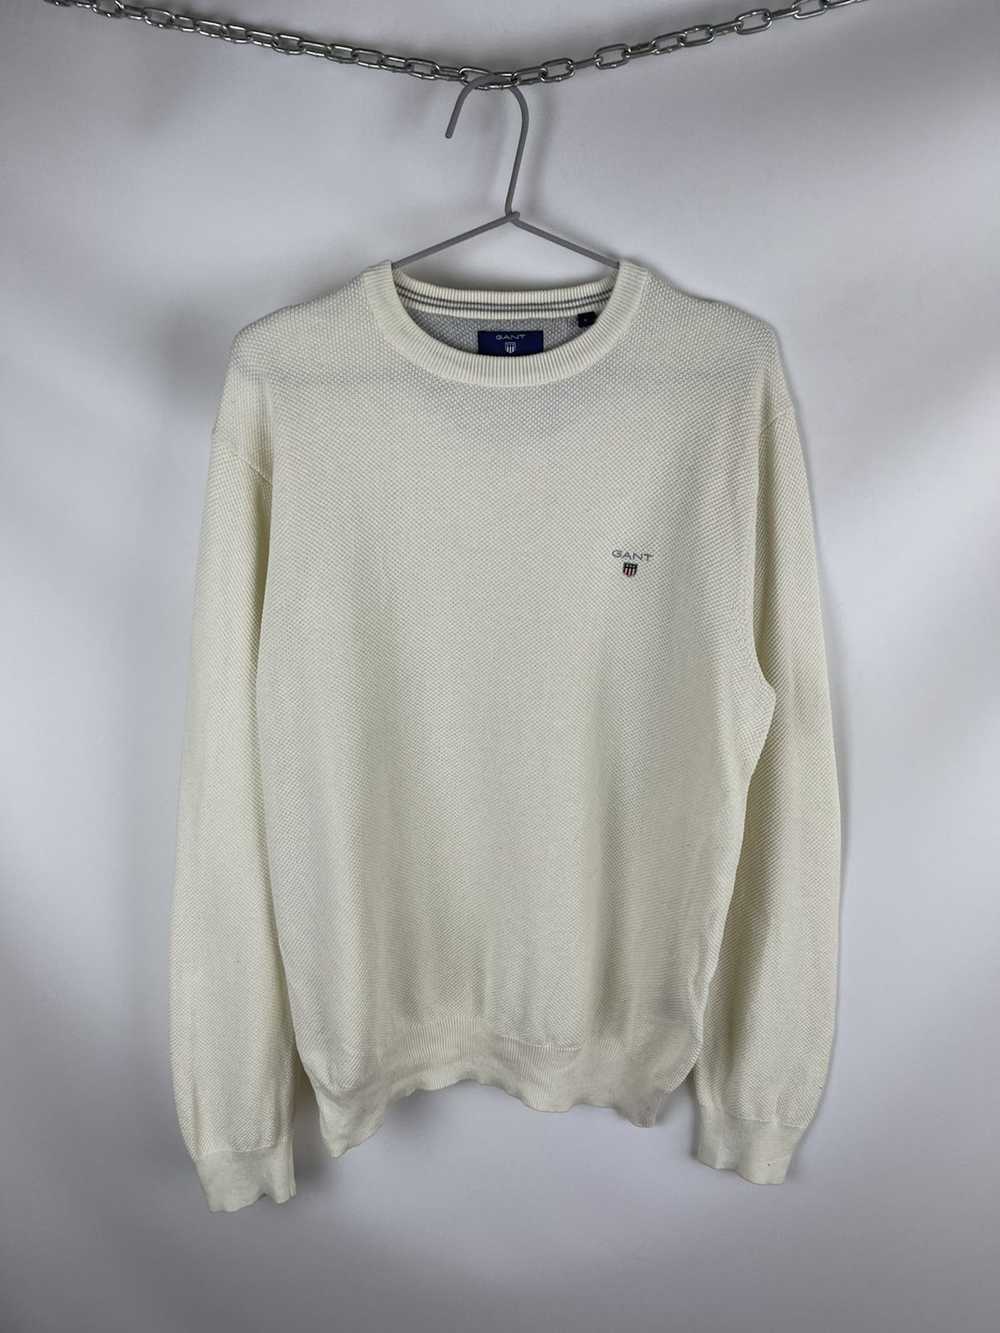 Gant Gant Premium Cotton knitted light sweater - image 1